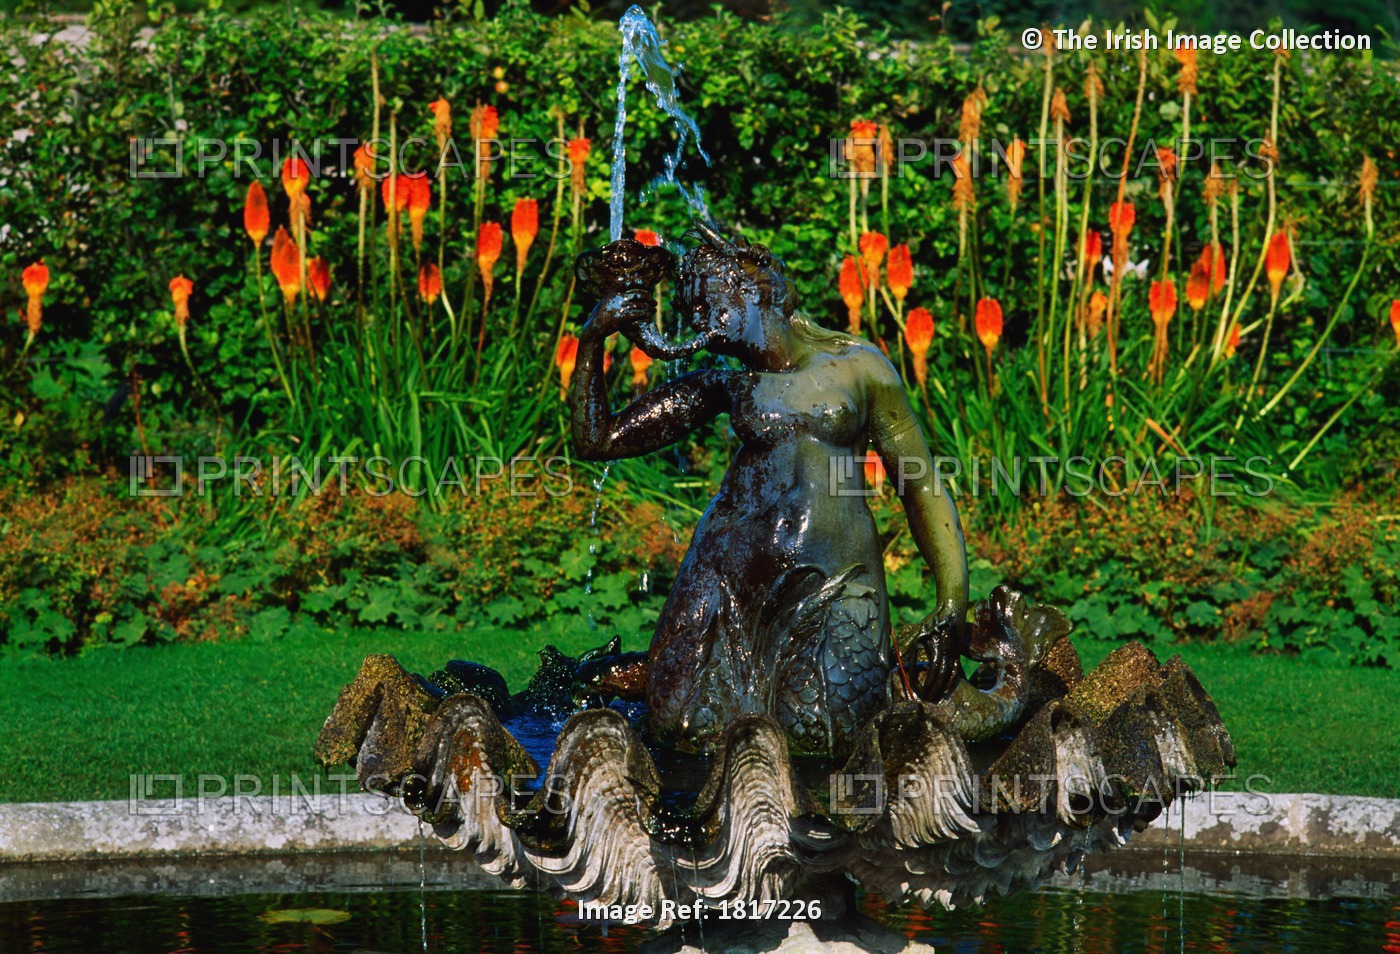 Powerscourt Estate, Powerscourt Gardens, Co Wicklow, Ireland; Fountain Sculpture